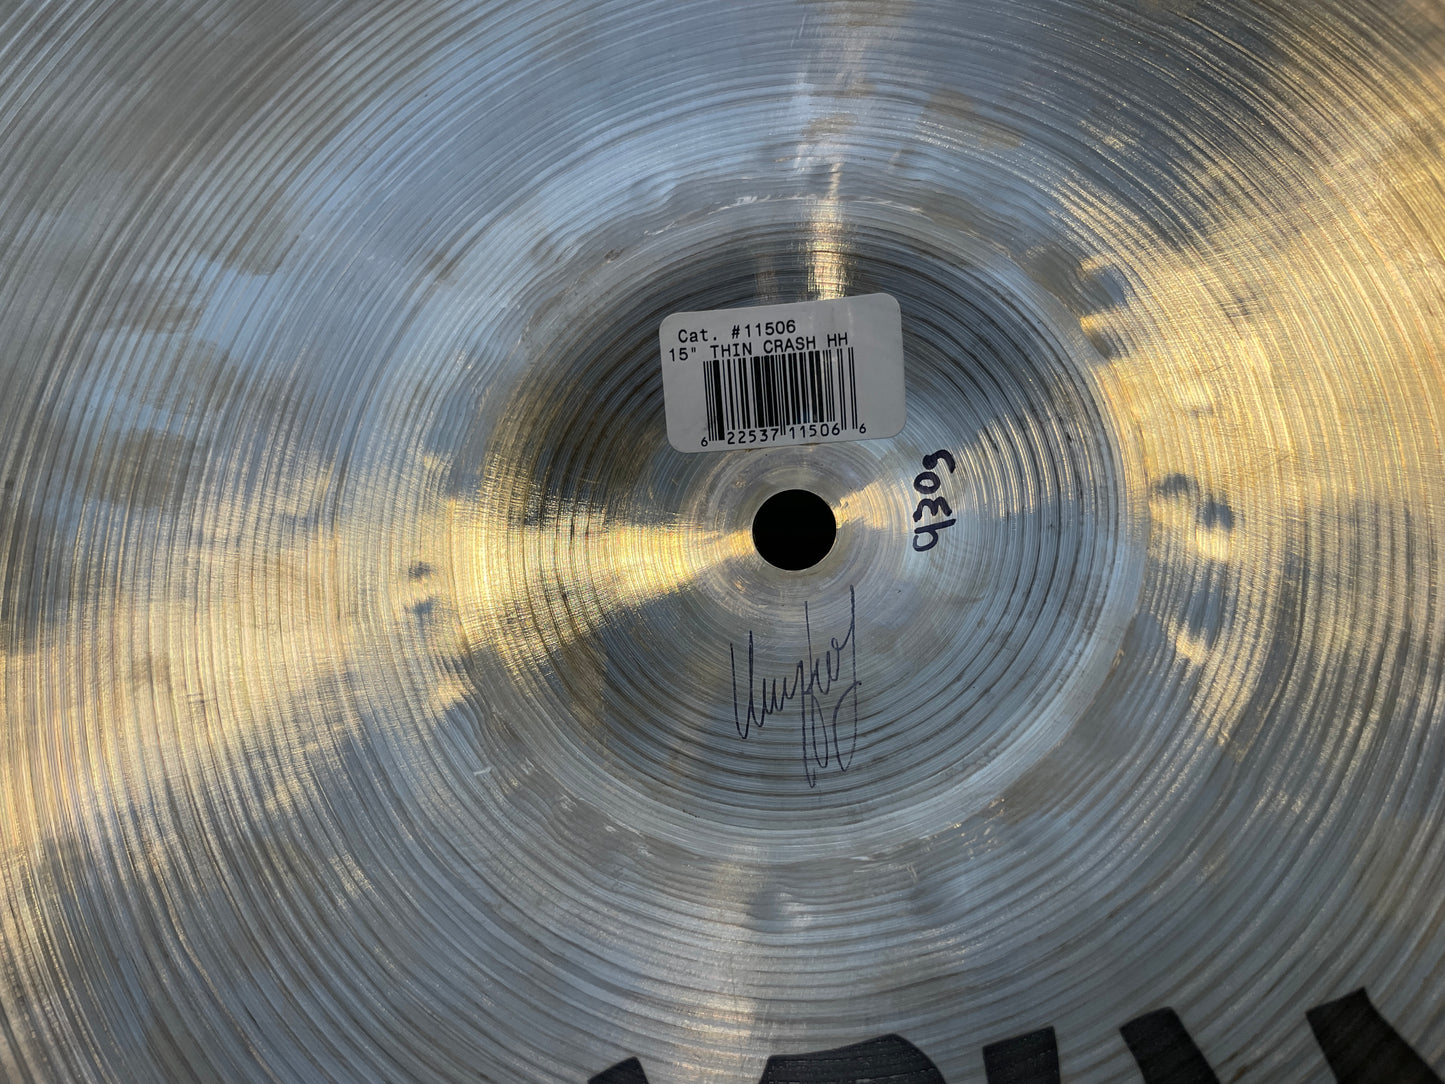 15" Sabian Hand Hammered HH Thin Crash Cymbal 930g